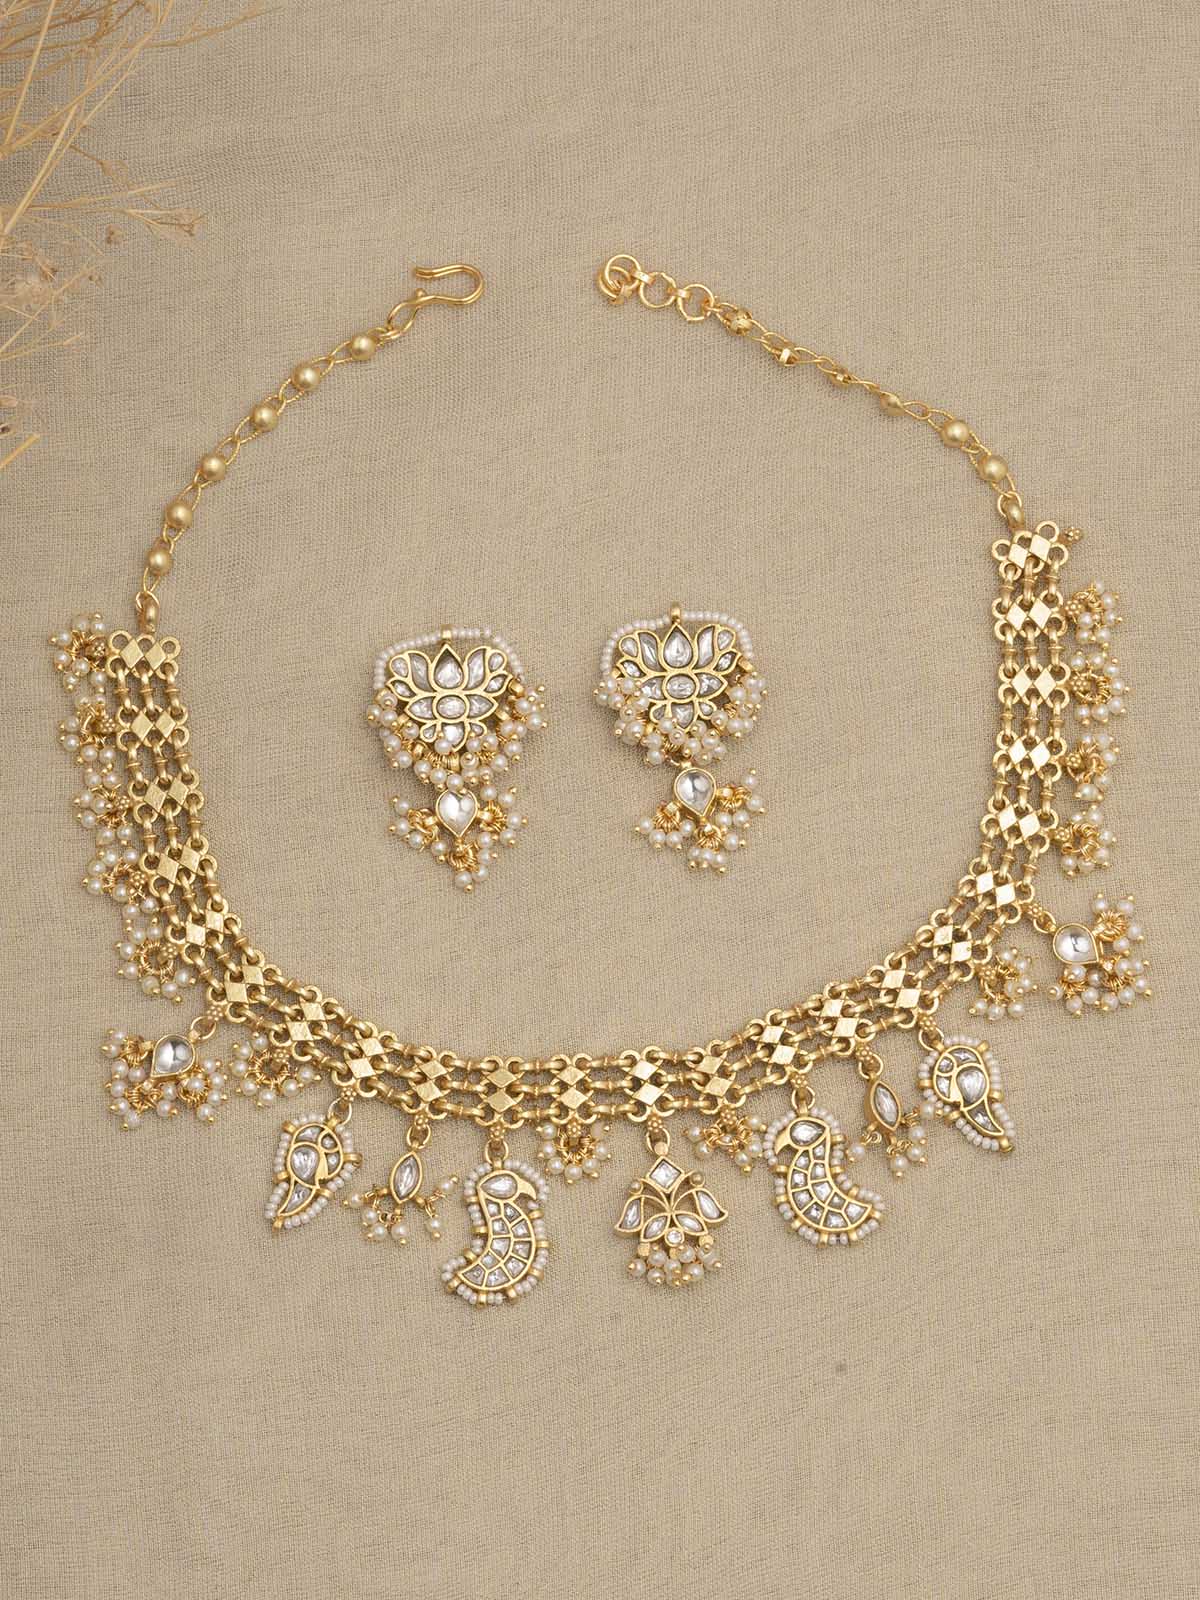 MR-S601 - White Color Gold Plated Mishr Medium Necklace Set